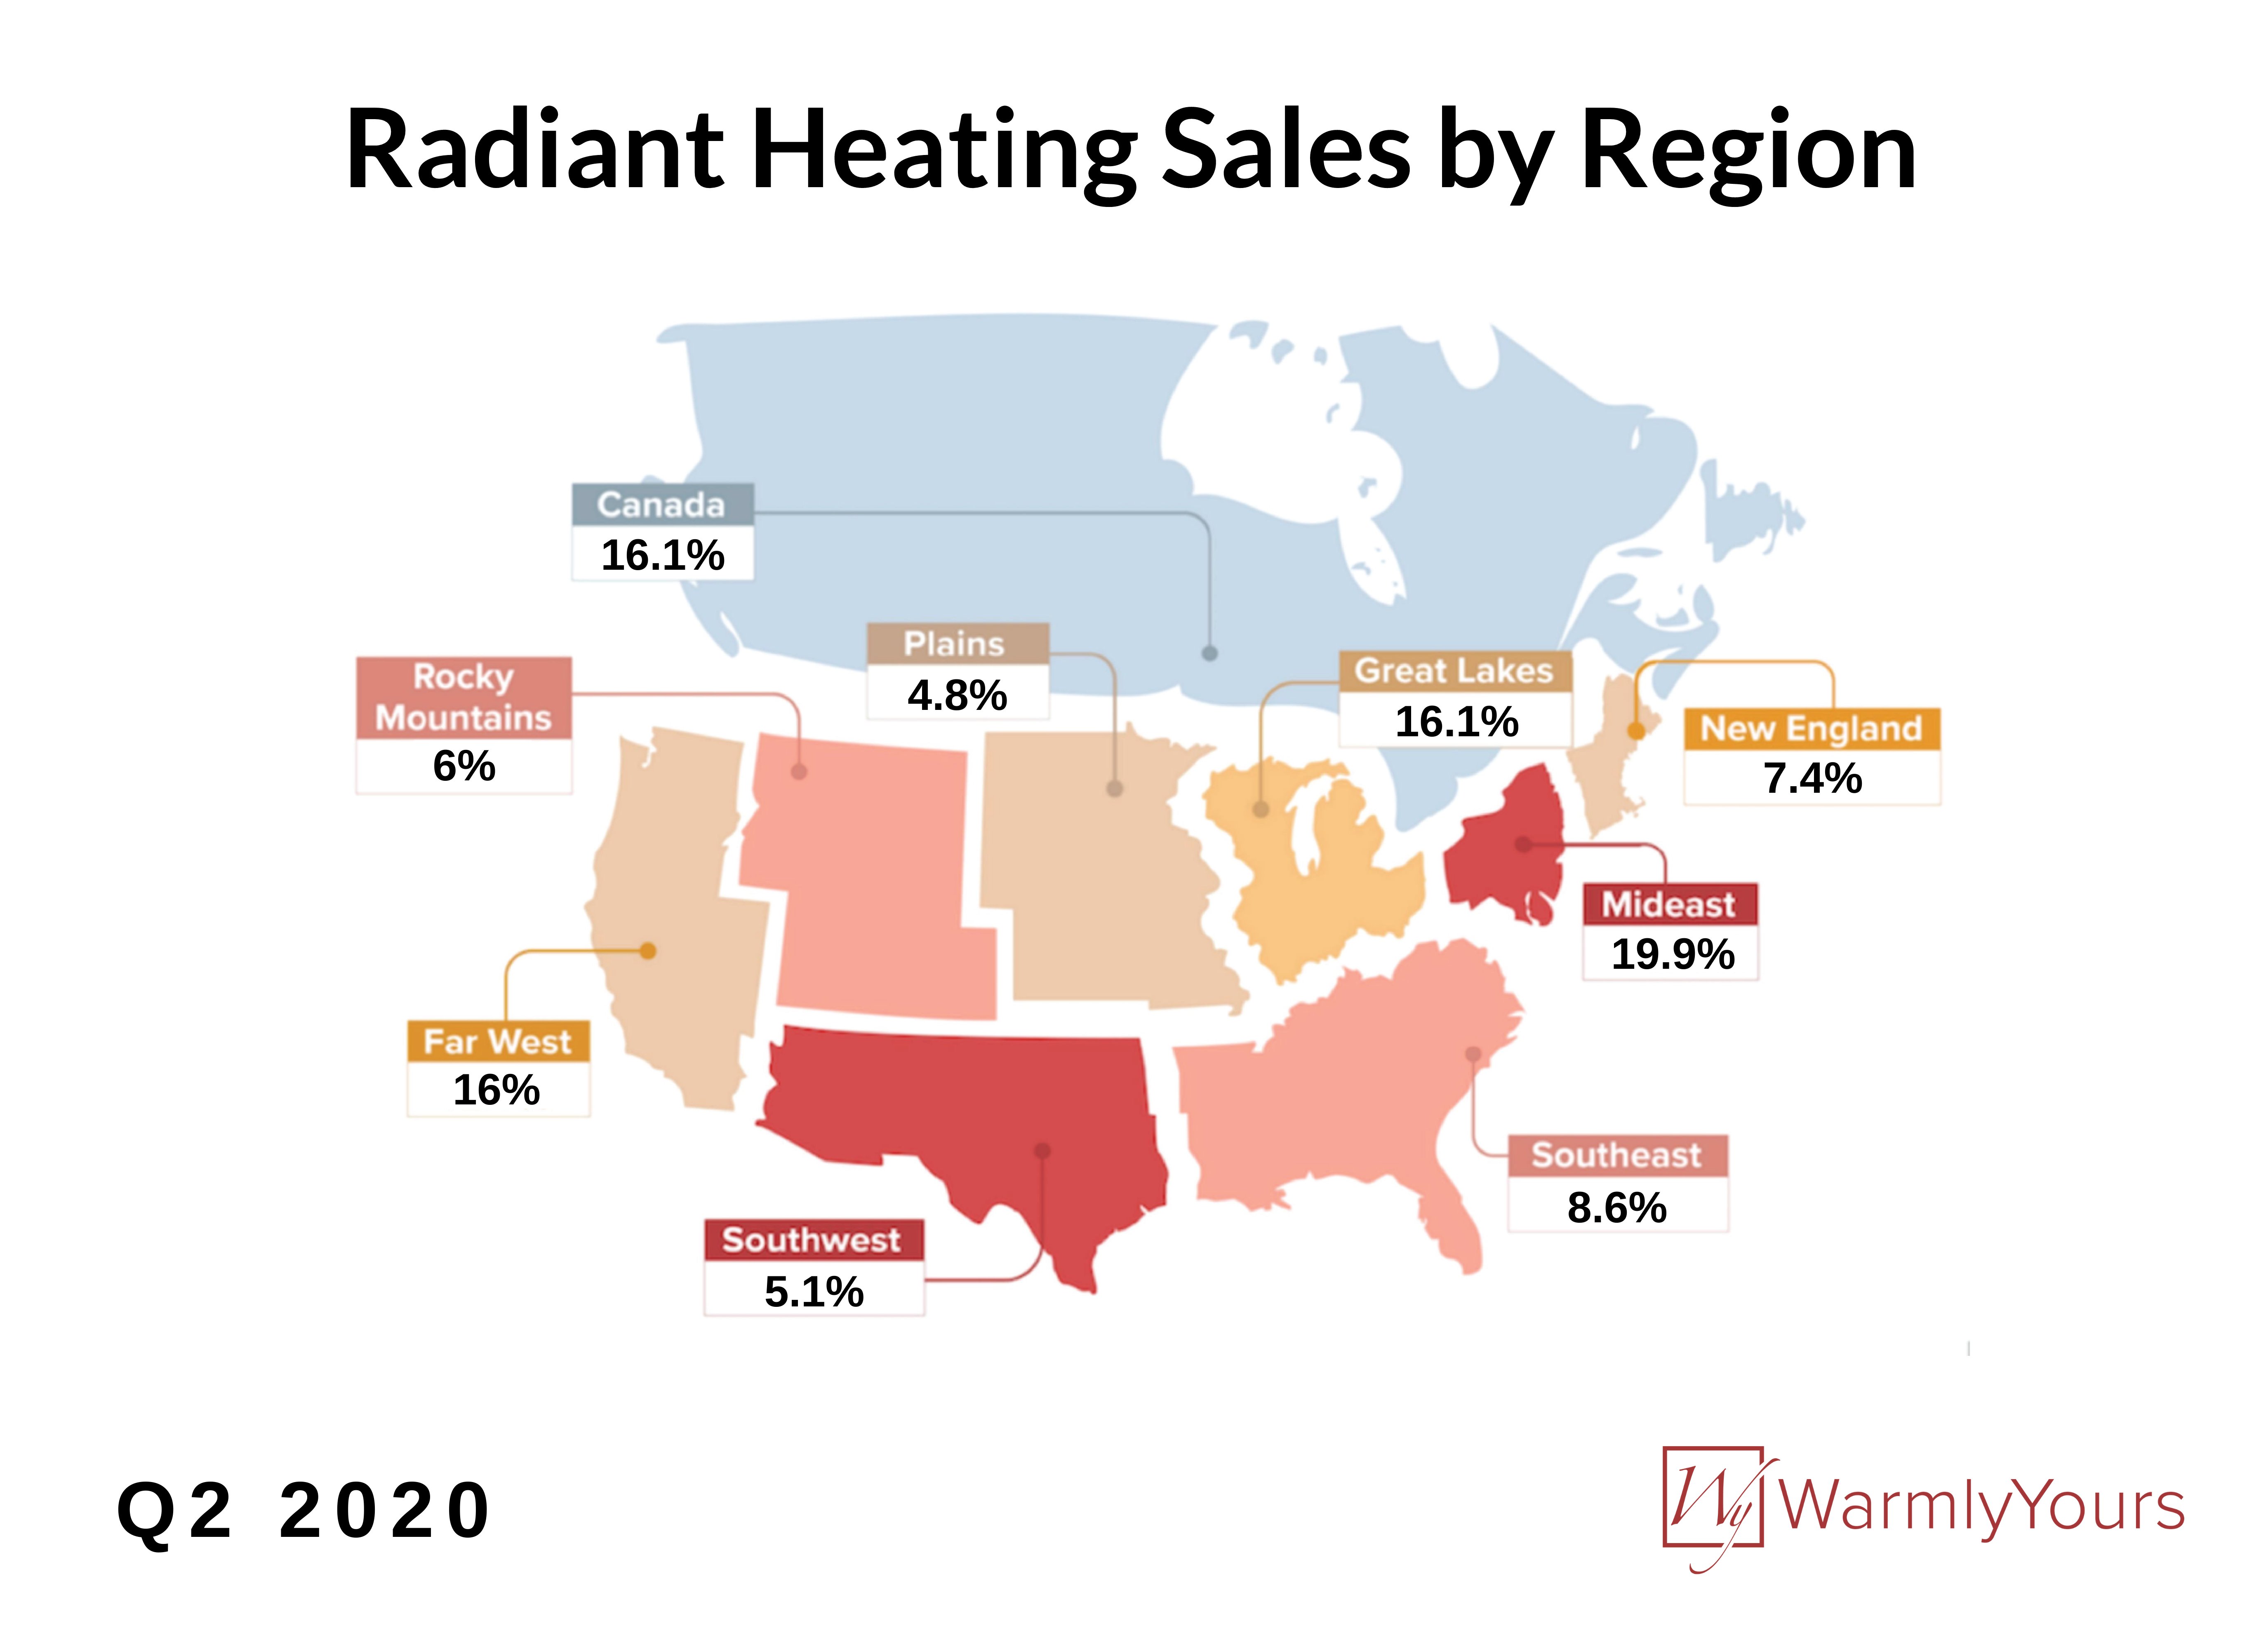 Q2 2020 radiant heating sales by region